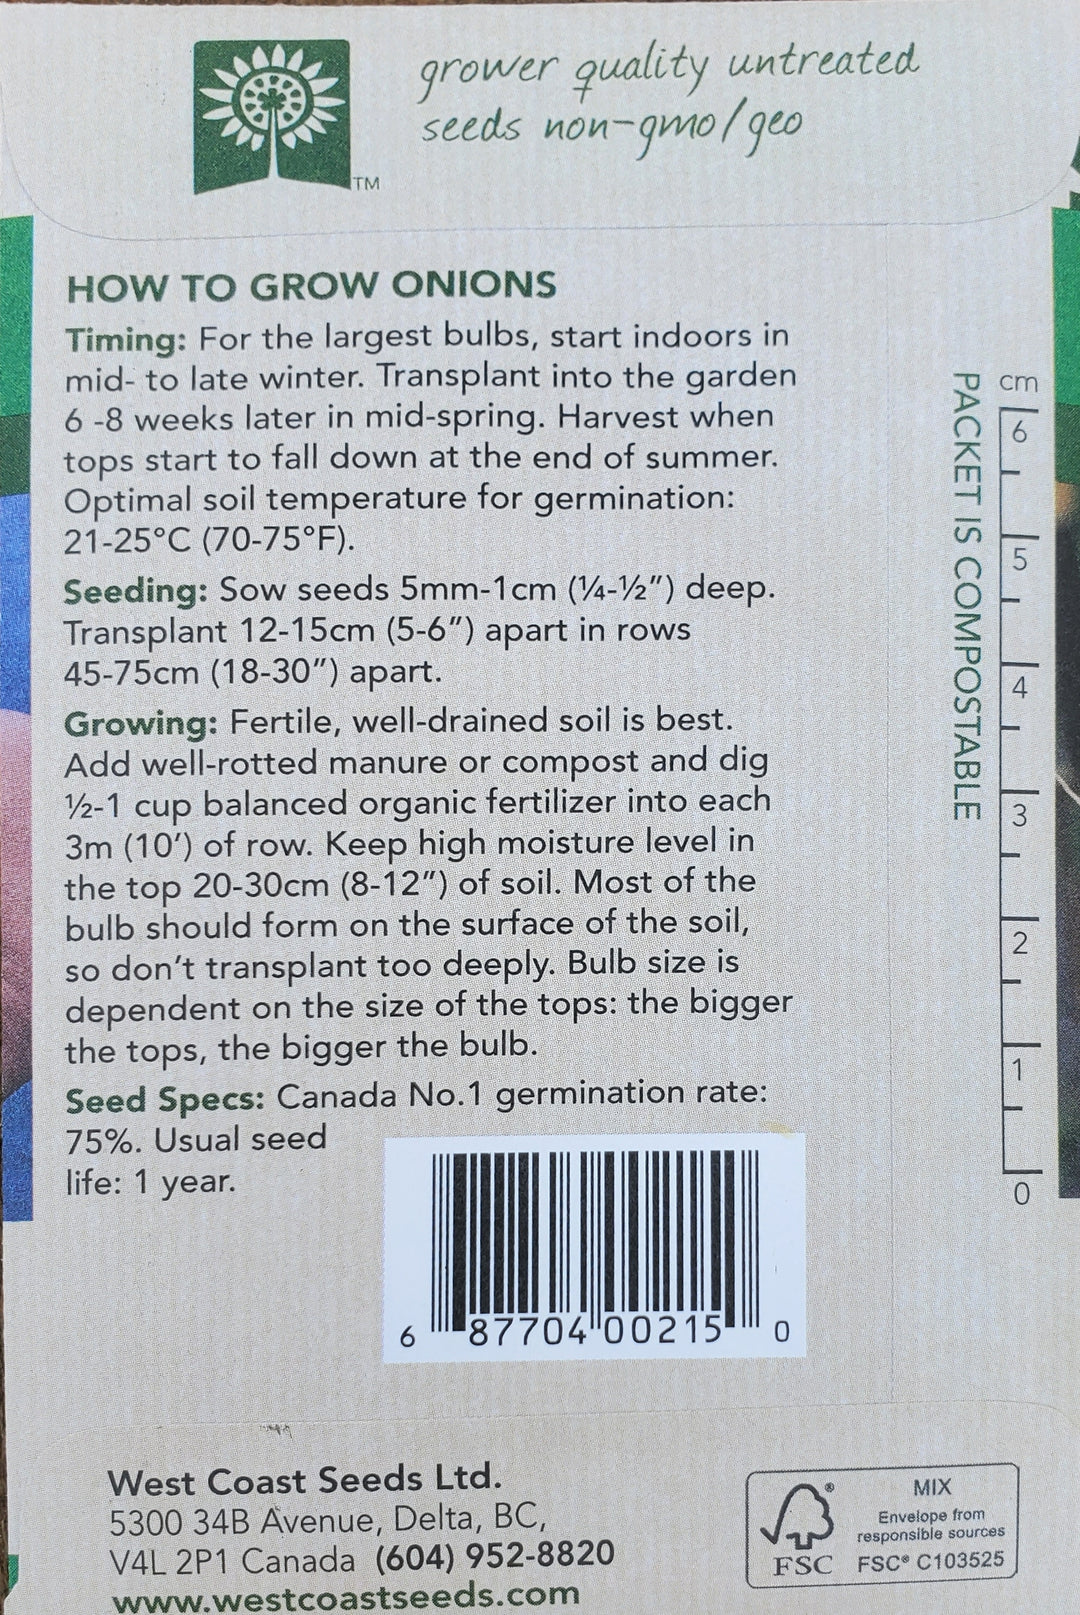 Sweet Onion Seeds - Ailsa Craig